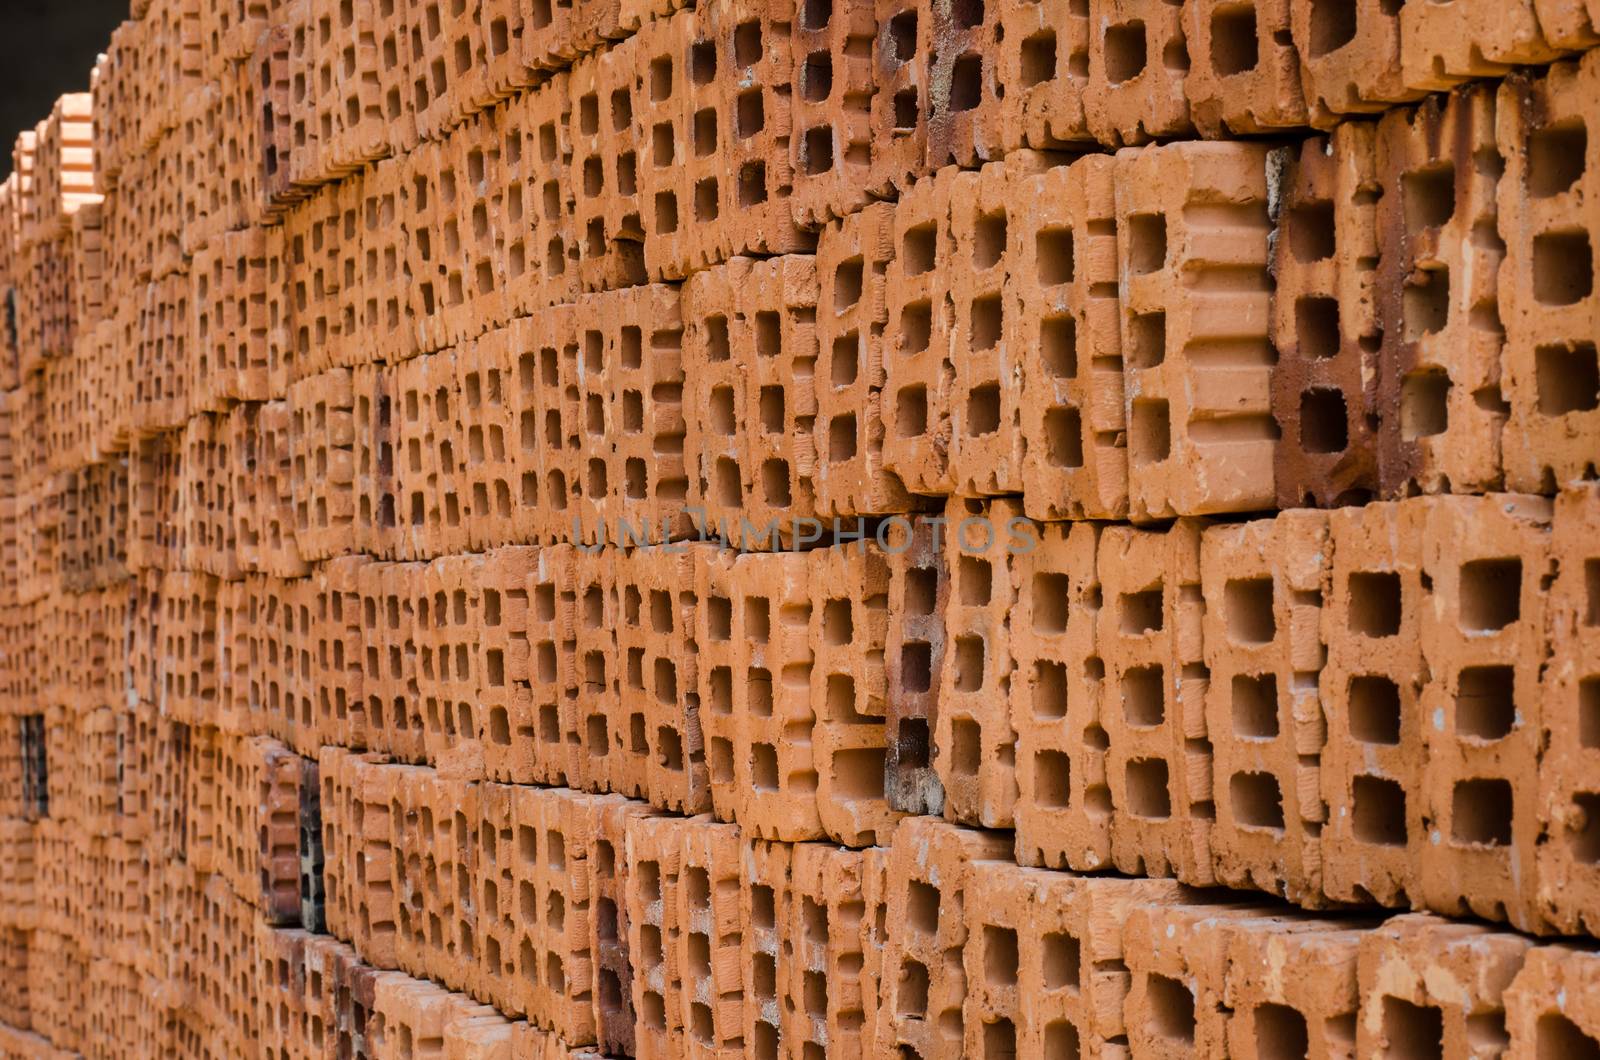 Orange bricks used in the construction